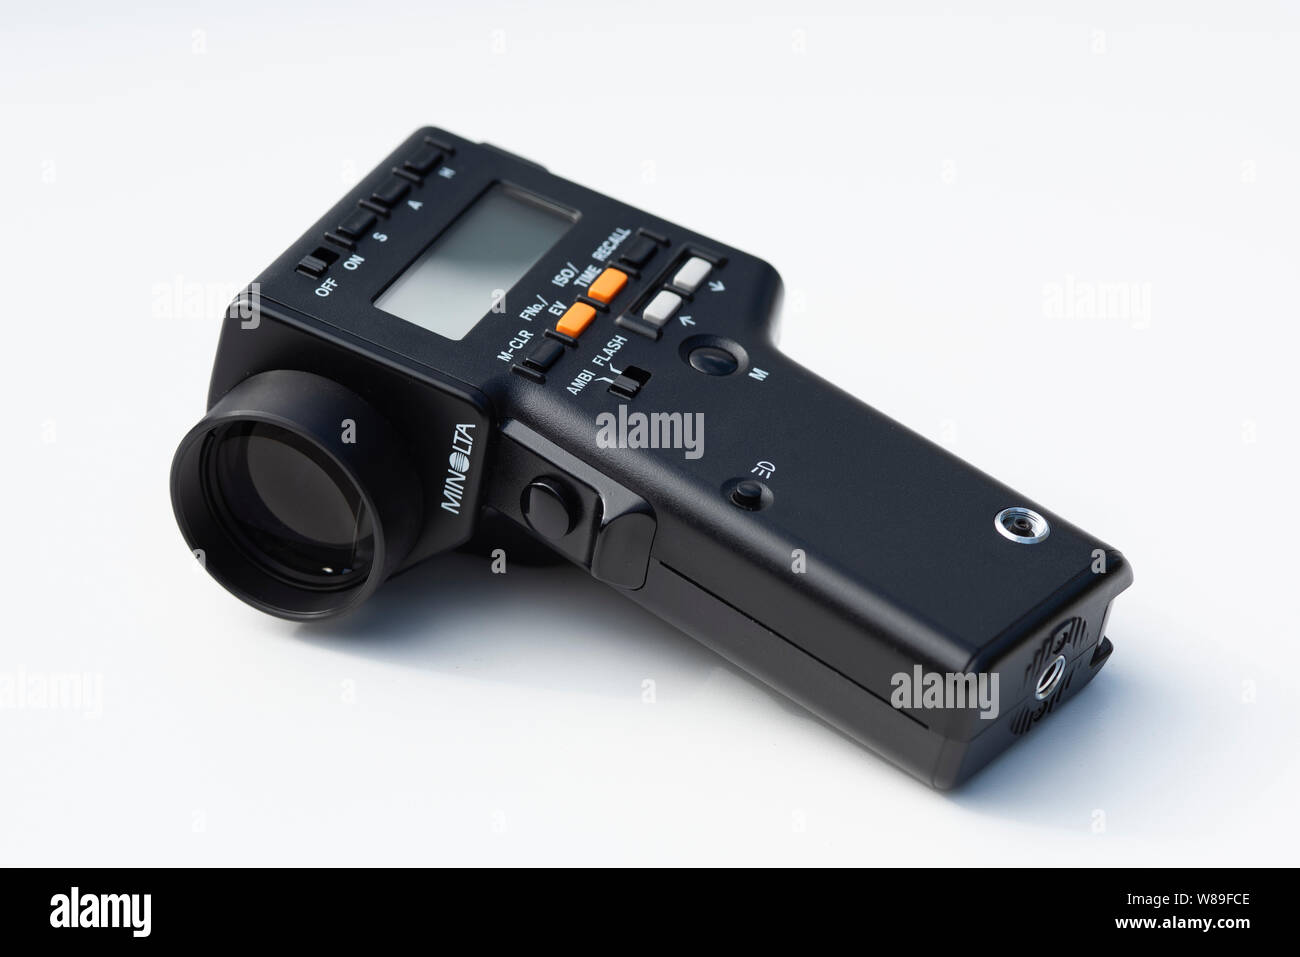 Minolta Spotmeter F precision photographic light meter Stock Photo